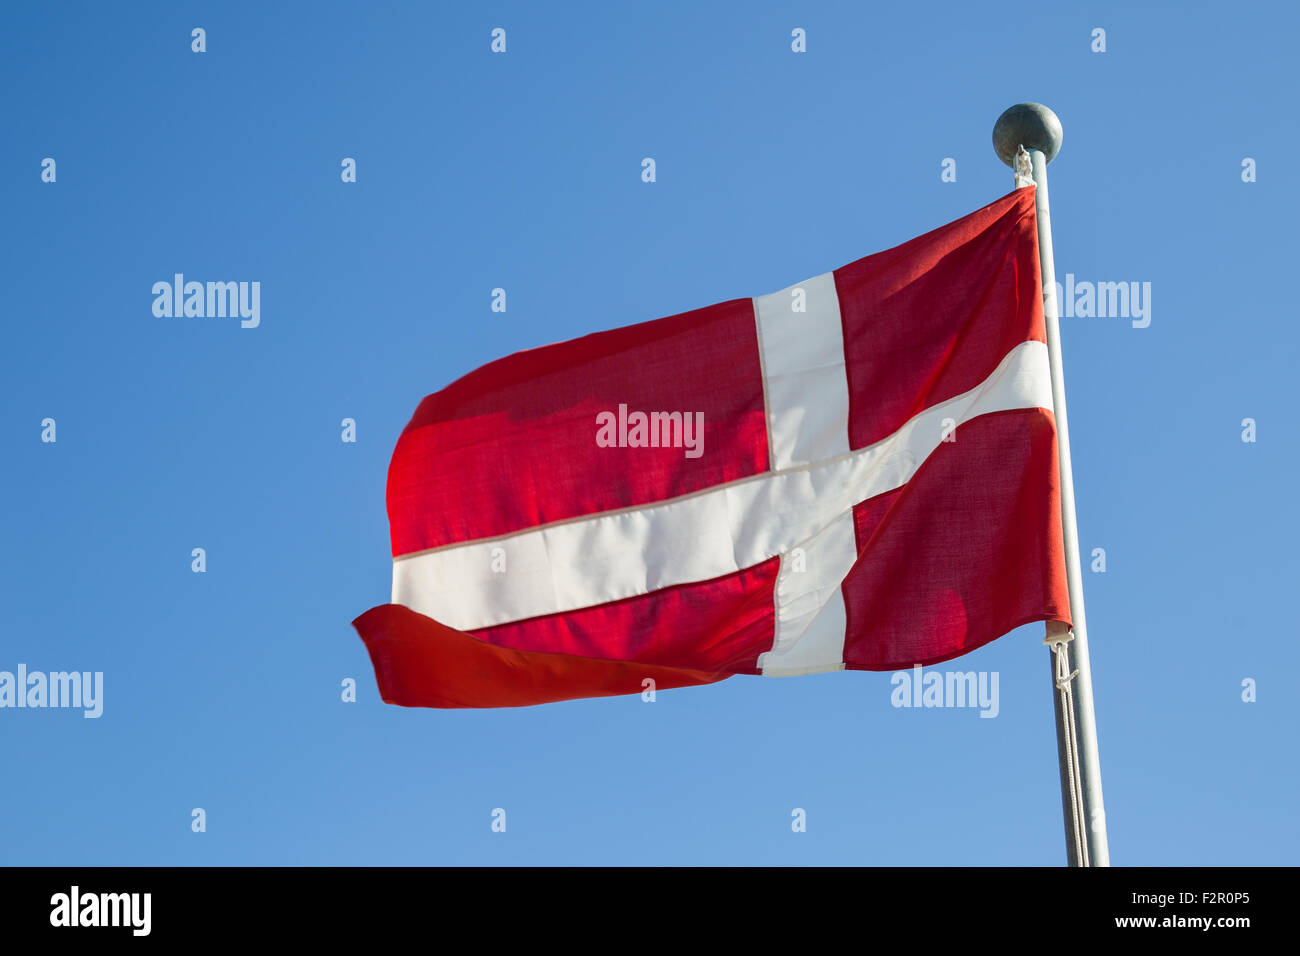 Photograph of the Danish Flag called Dannebrog. Stock Photo